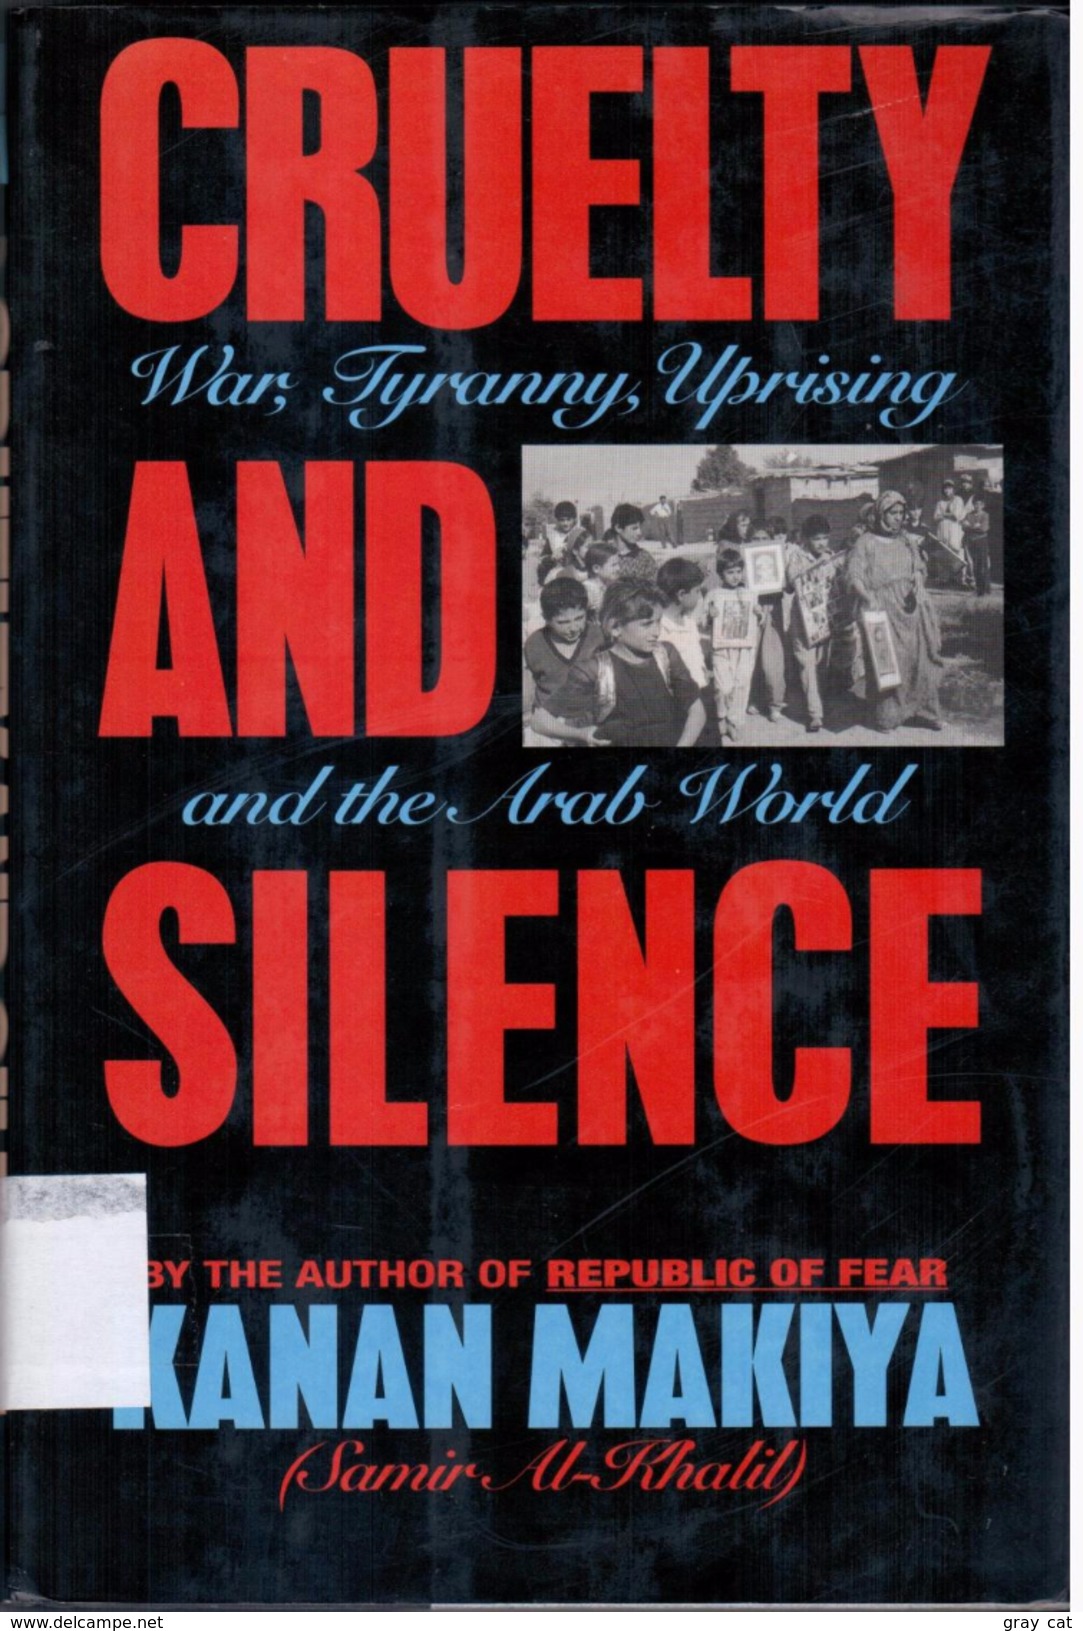 Cruelty And Silence: War, Tyranny, Uprising In The Arab World By Makiya, Kanan (ISBN 9780393031089) - Middle East